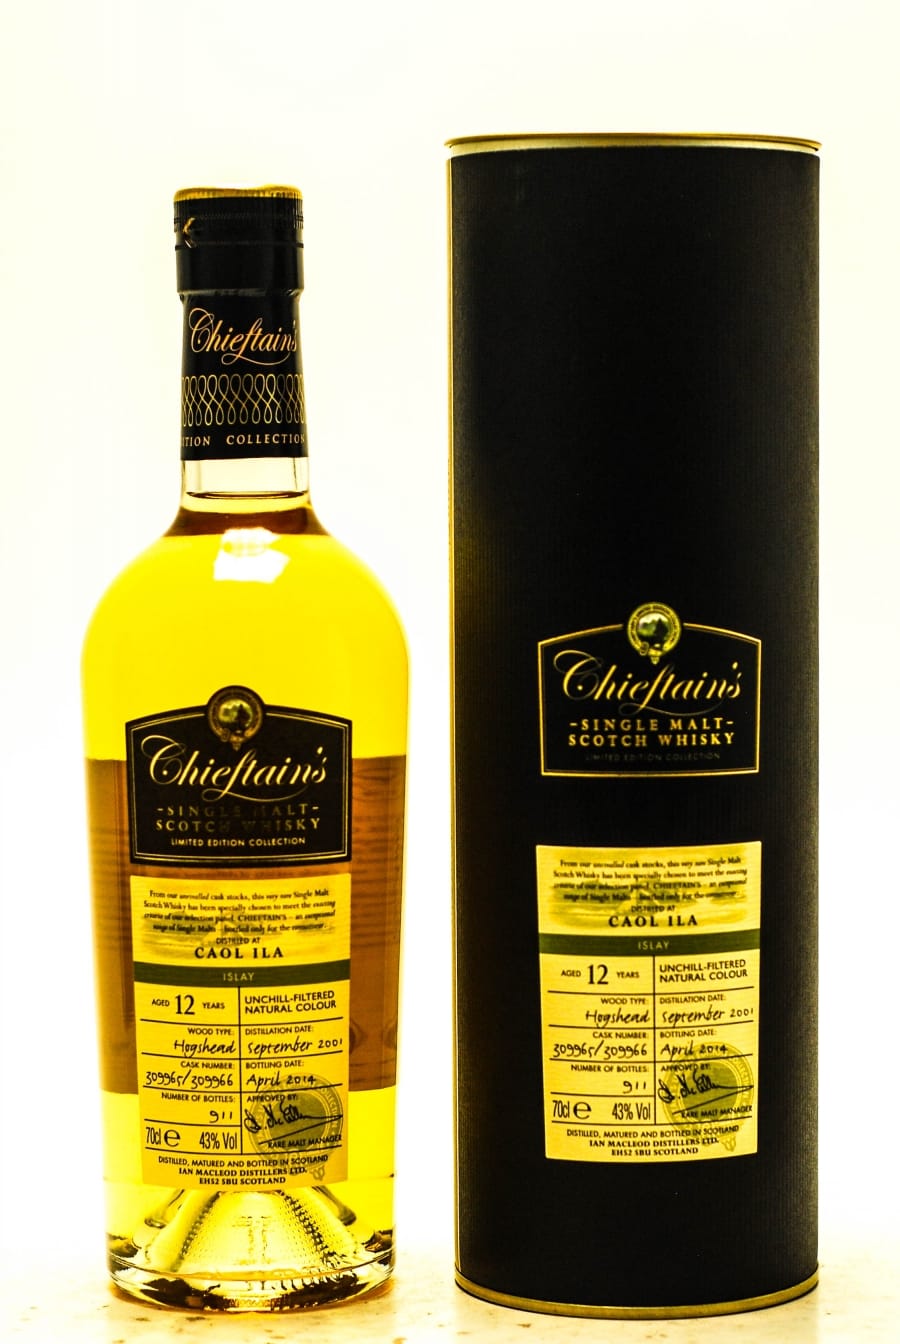 Caol Ila - Caol Ila 12 YO Chieftains Distilled: 09.2001 Bottled: 04.2014 Cask: 309965/309966 1 Of 911 Bottles 43% 2001 Perfect